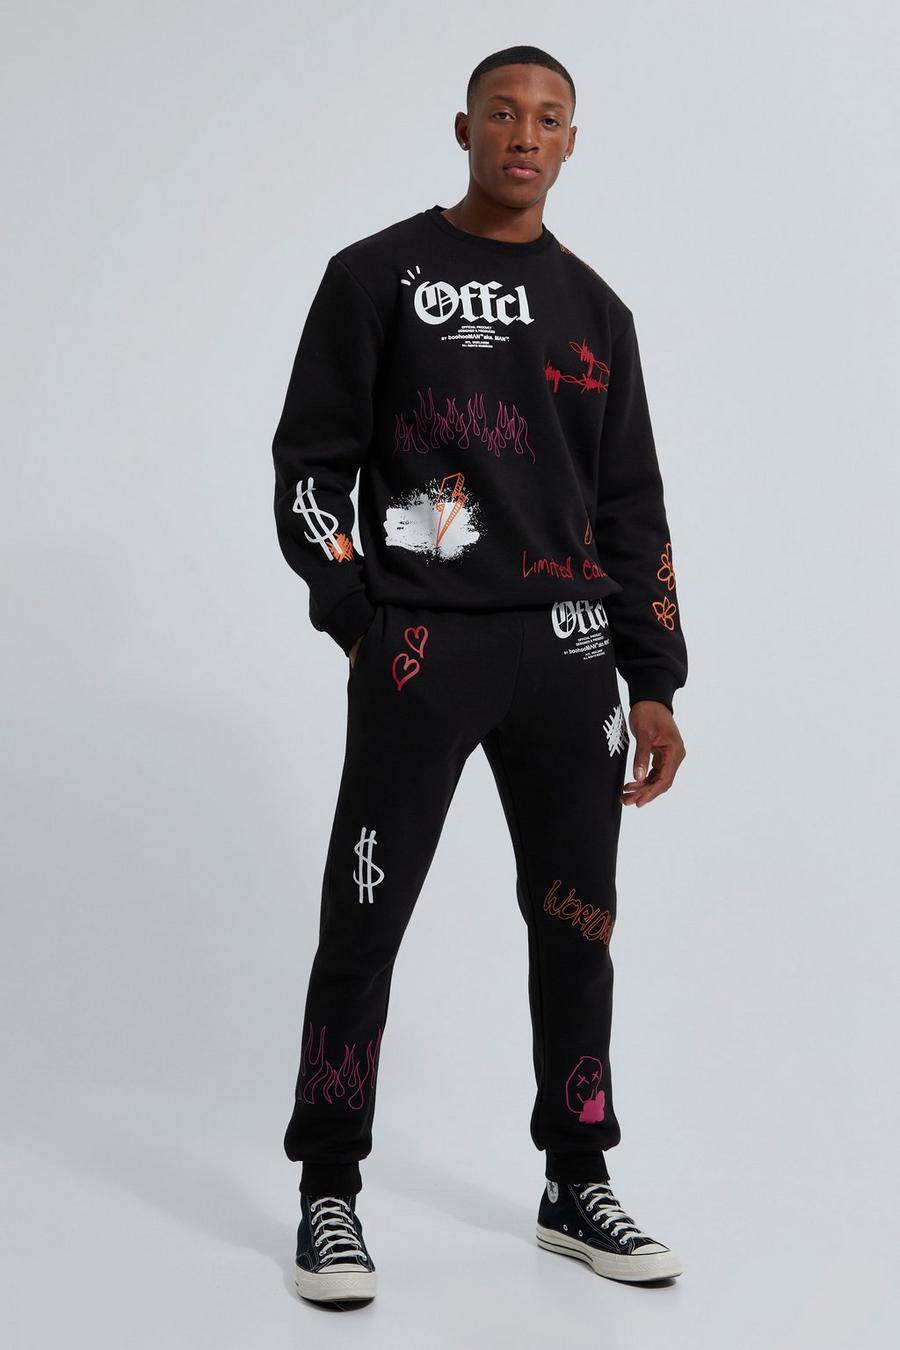 Black Offcl Graffiti Sweater Tracksuit